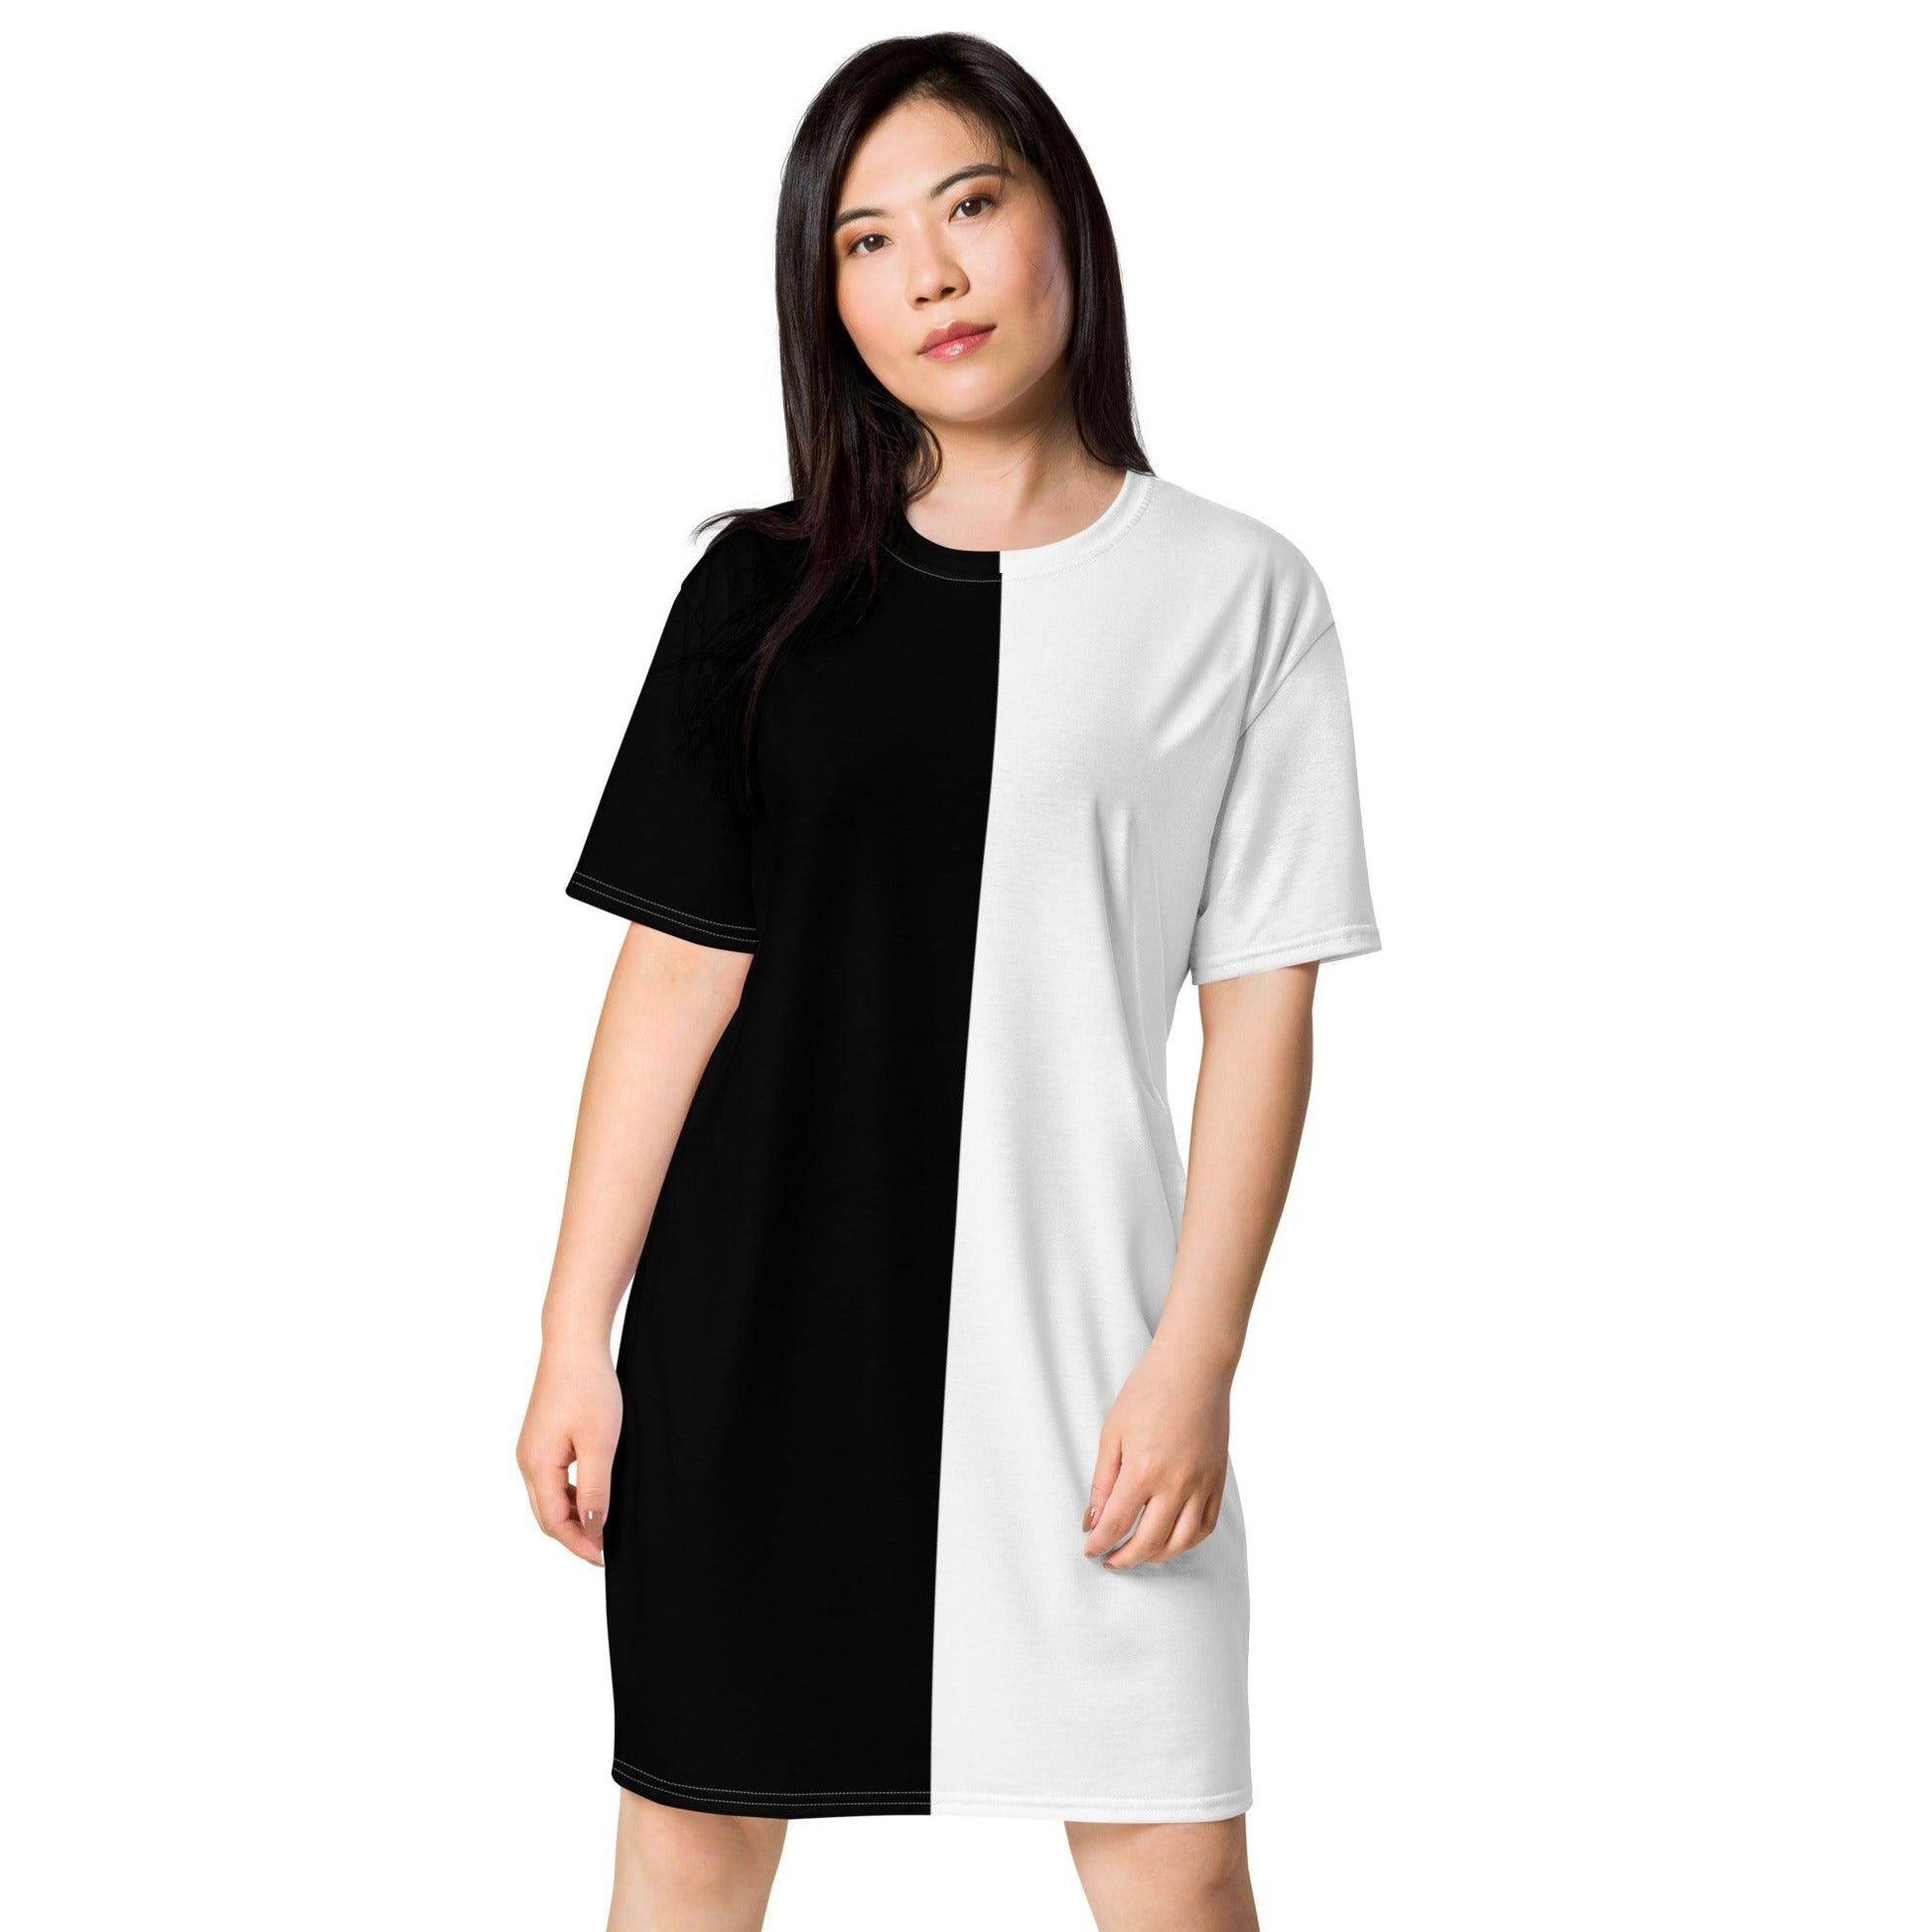 Half Black Half White - Womens T-Shirt Dress - iSAW Company